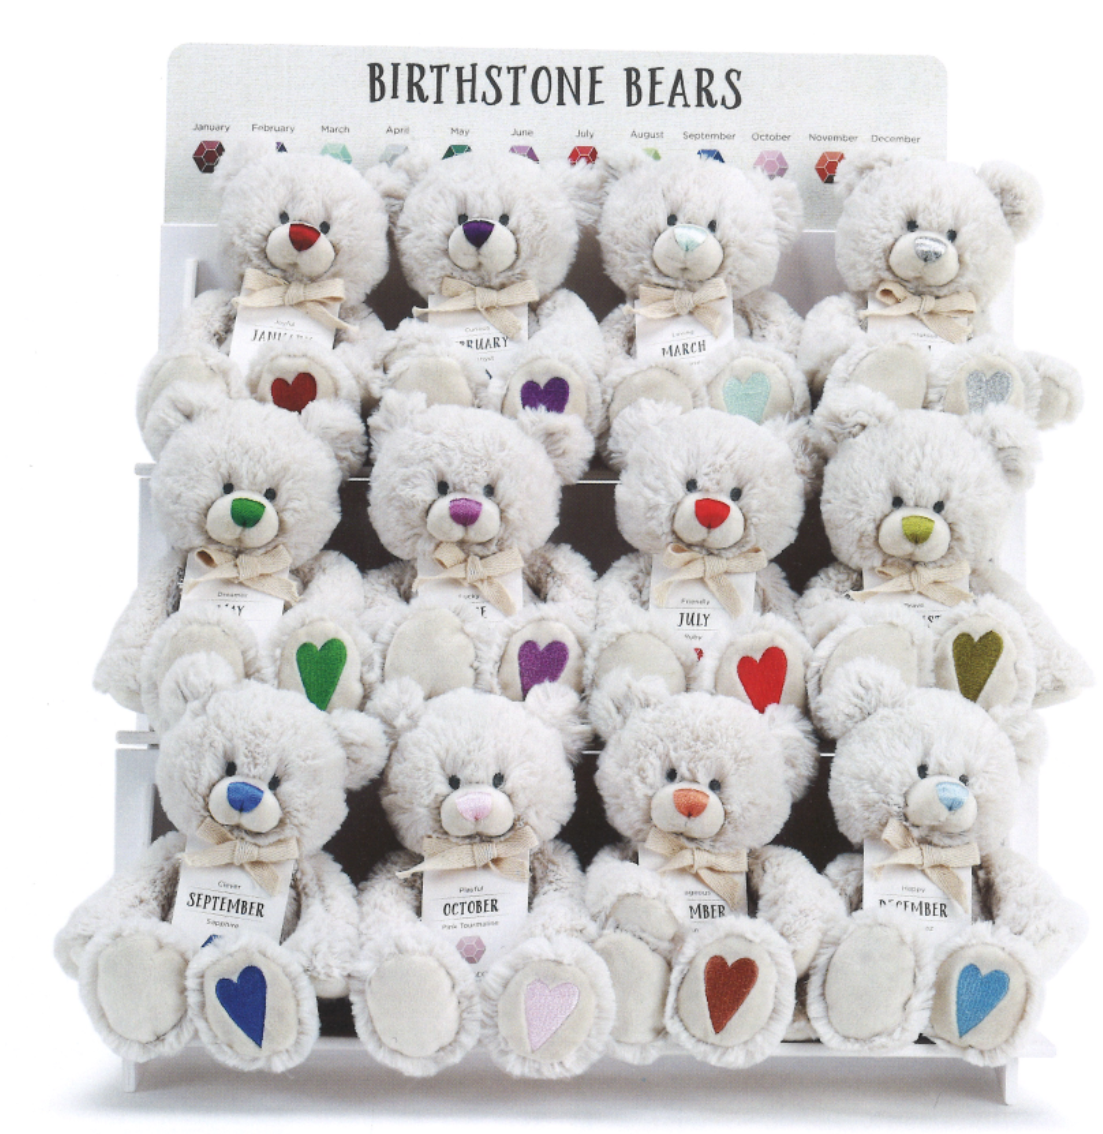 Birthstone Bears